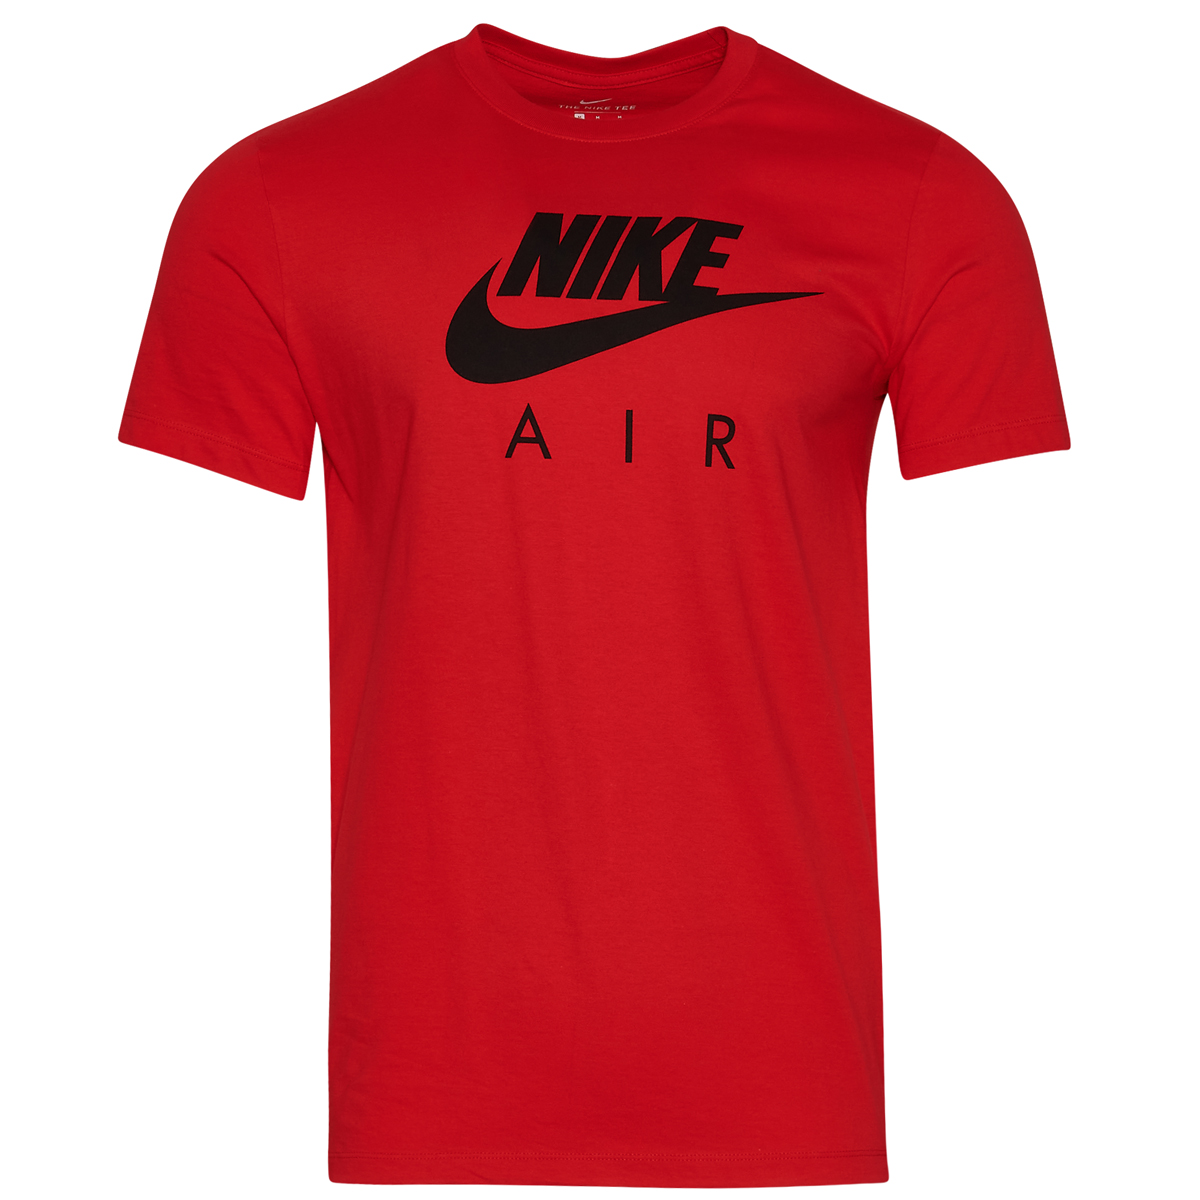 Nike Air T Shirt Red Black